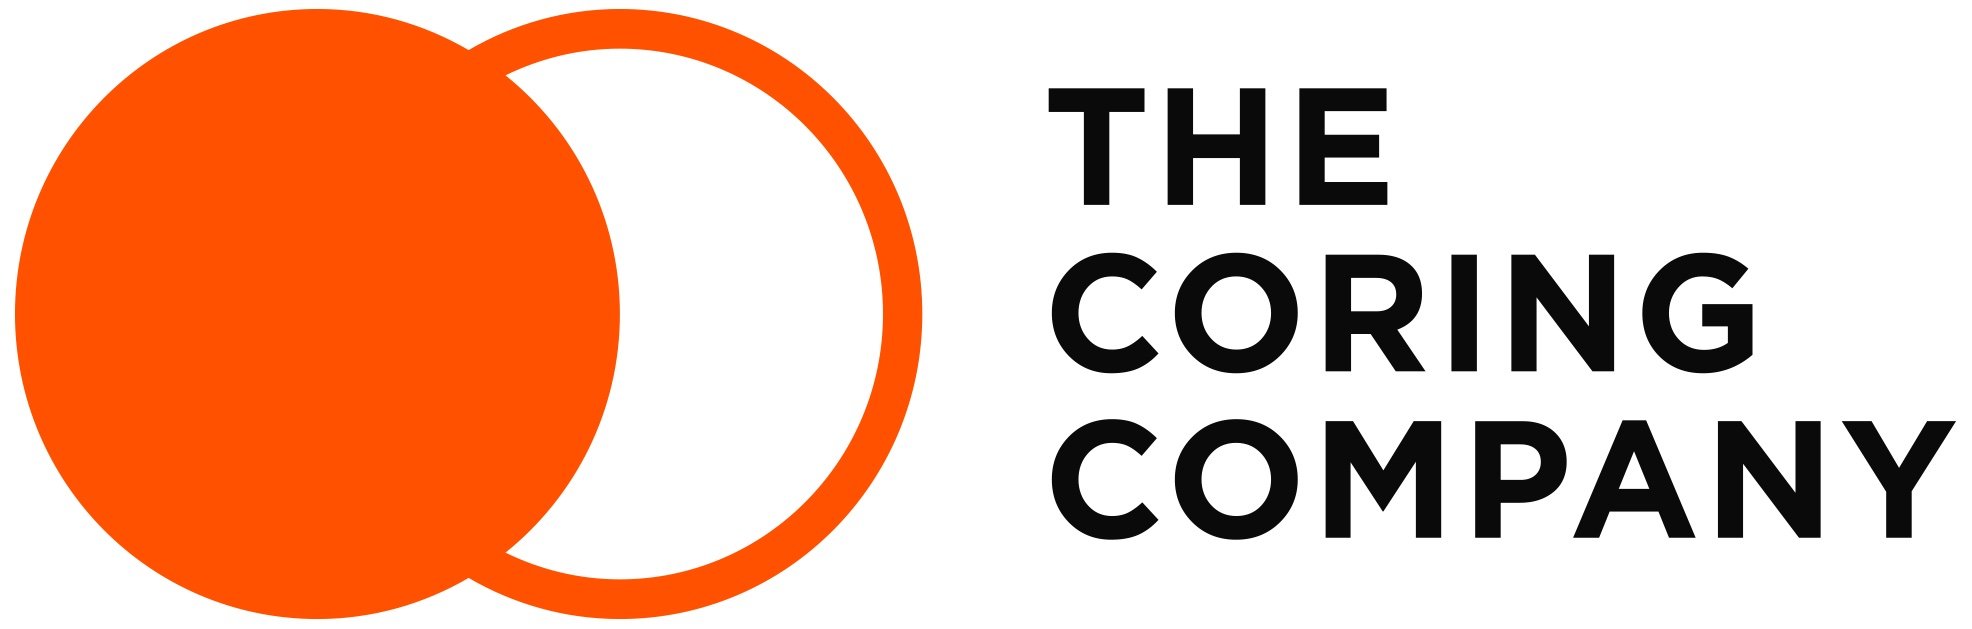 the-coring-company-logo-farge.jpg